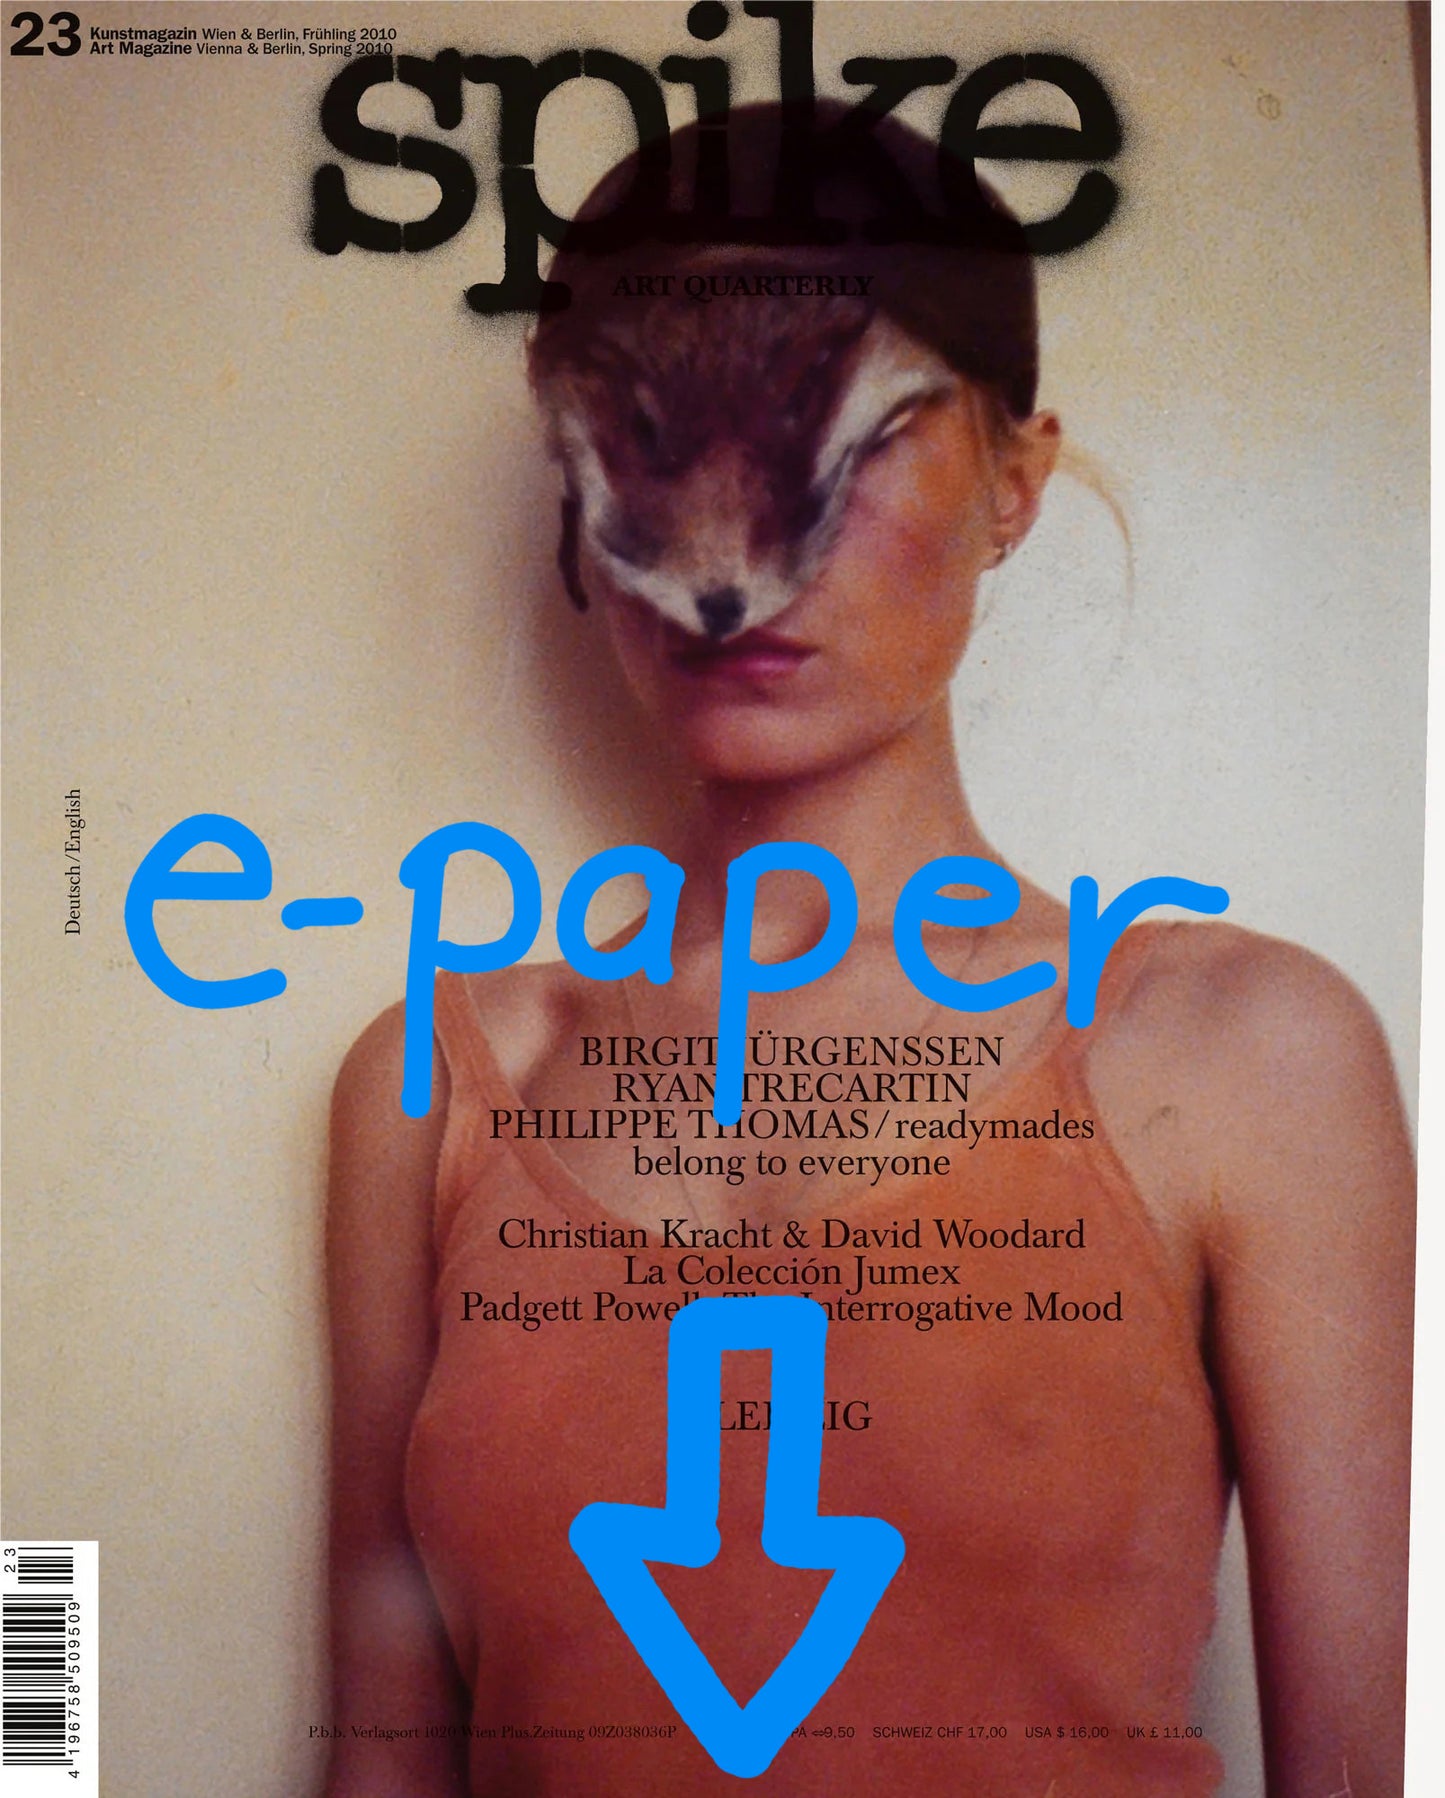 Spike ePaper (Issue 23)